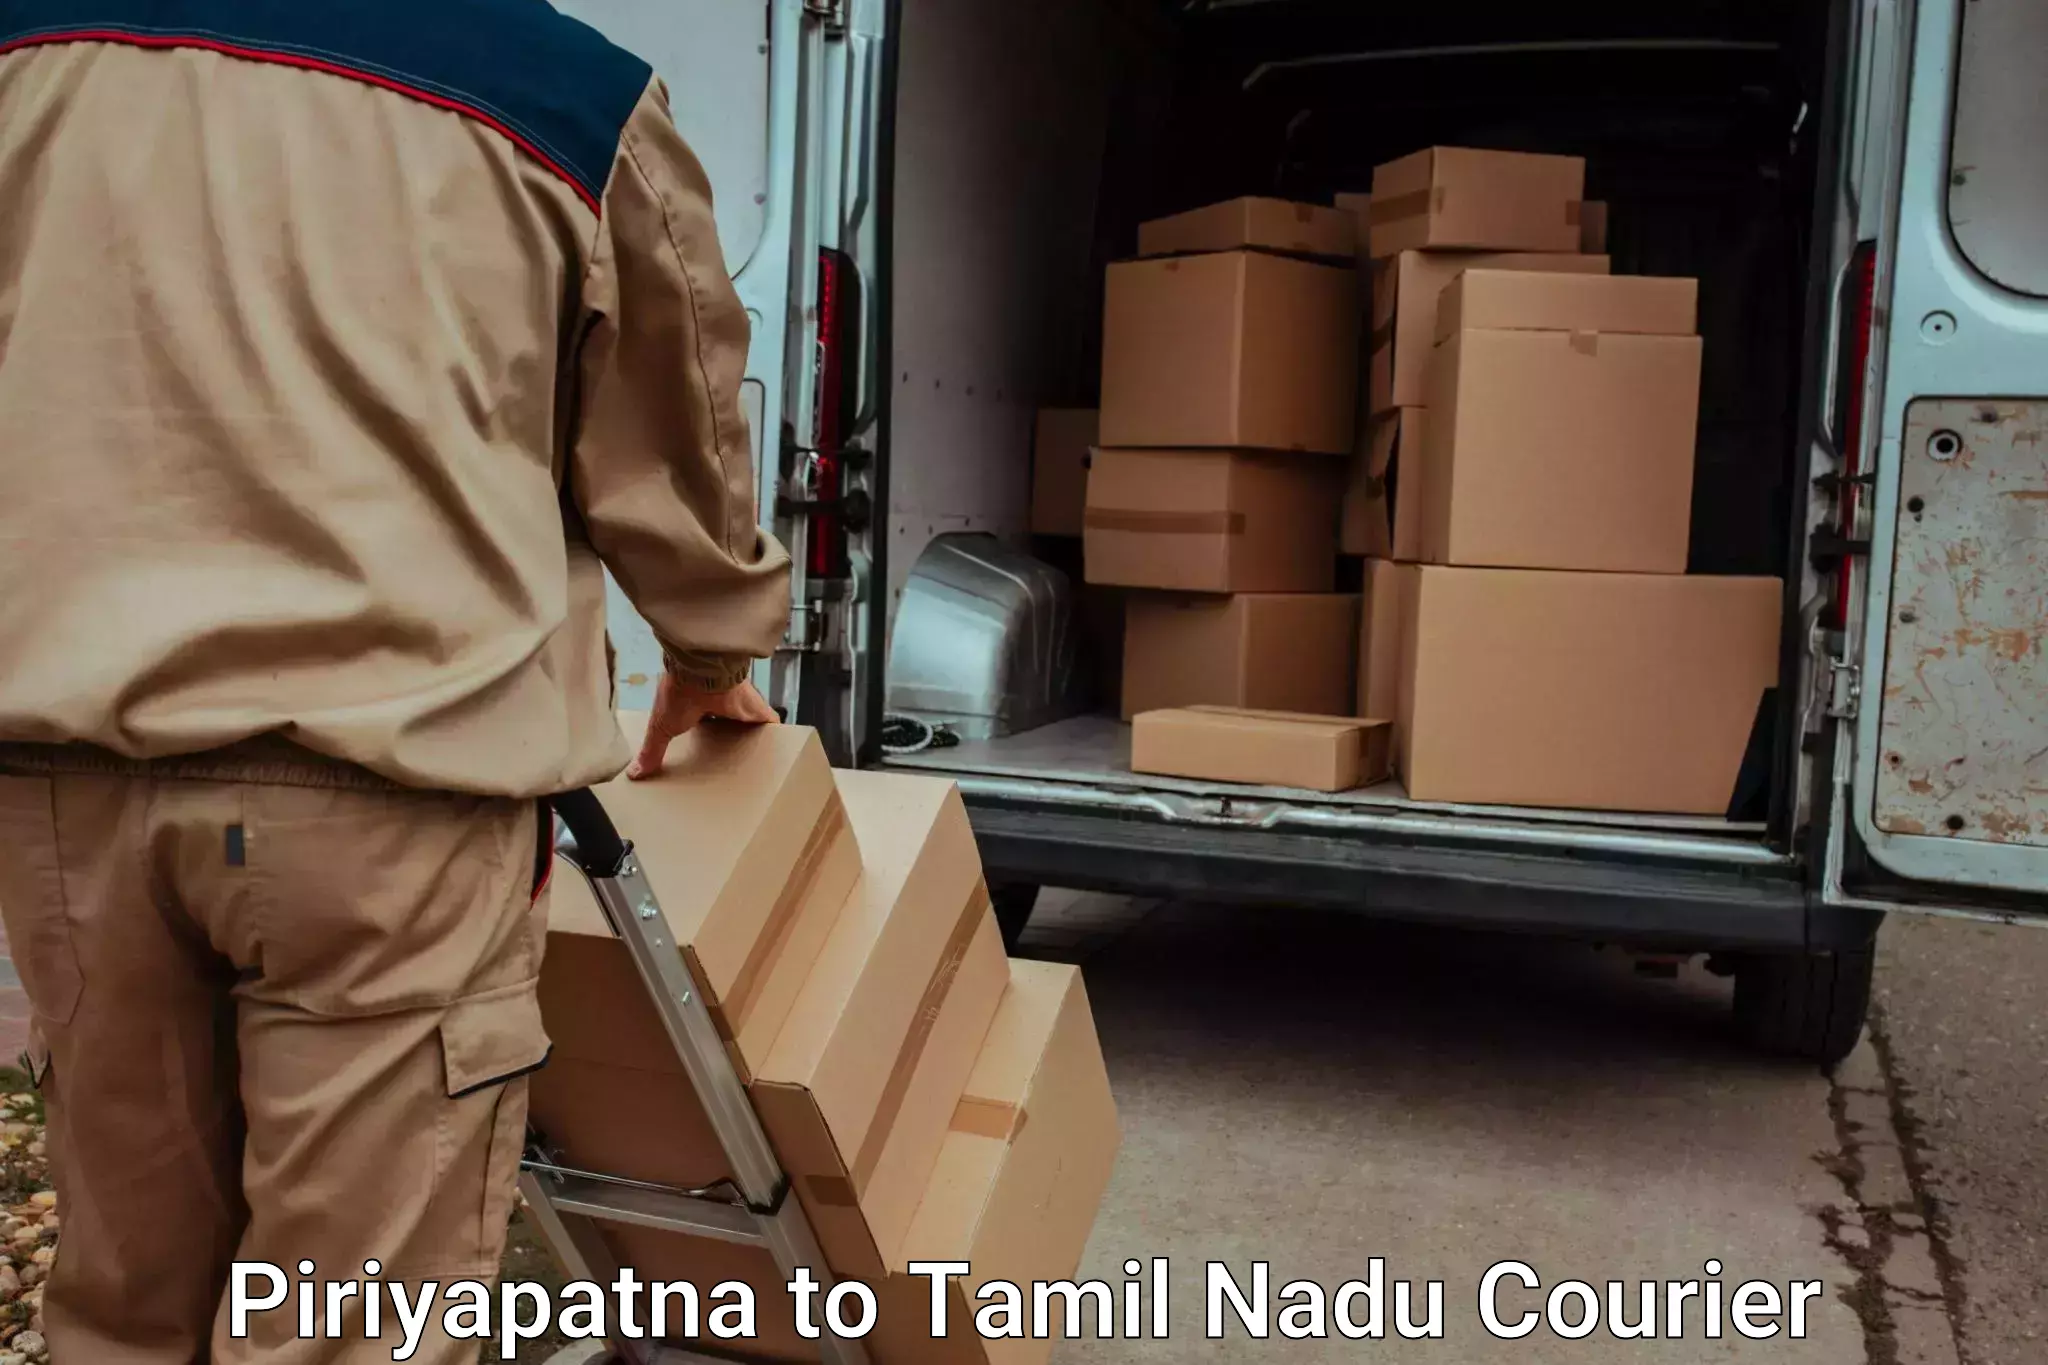 Trusted relocation experts Piriyapatna to Sivakasi